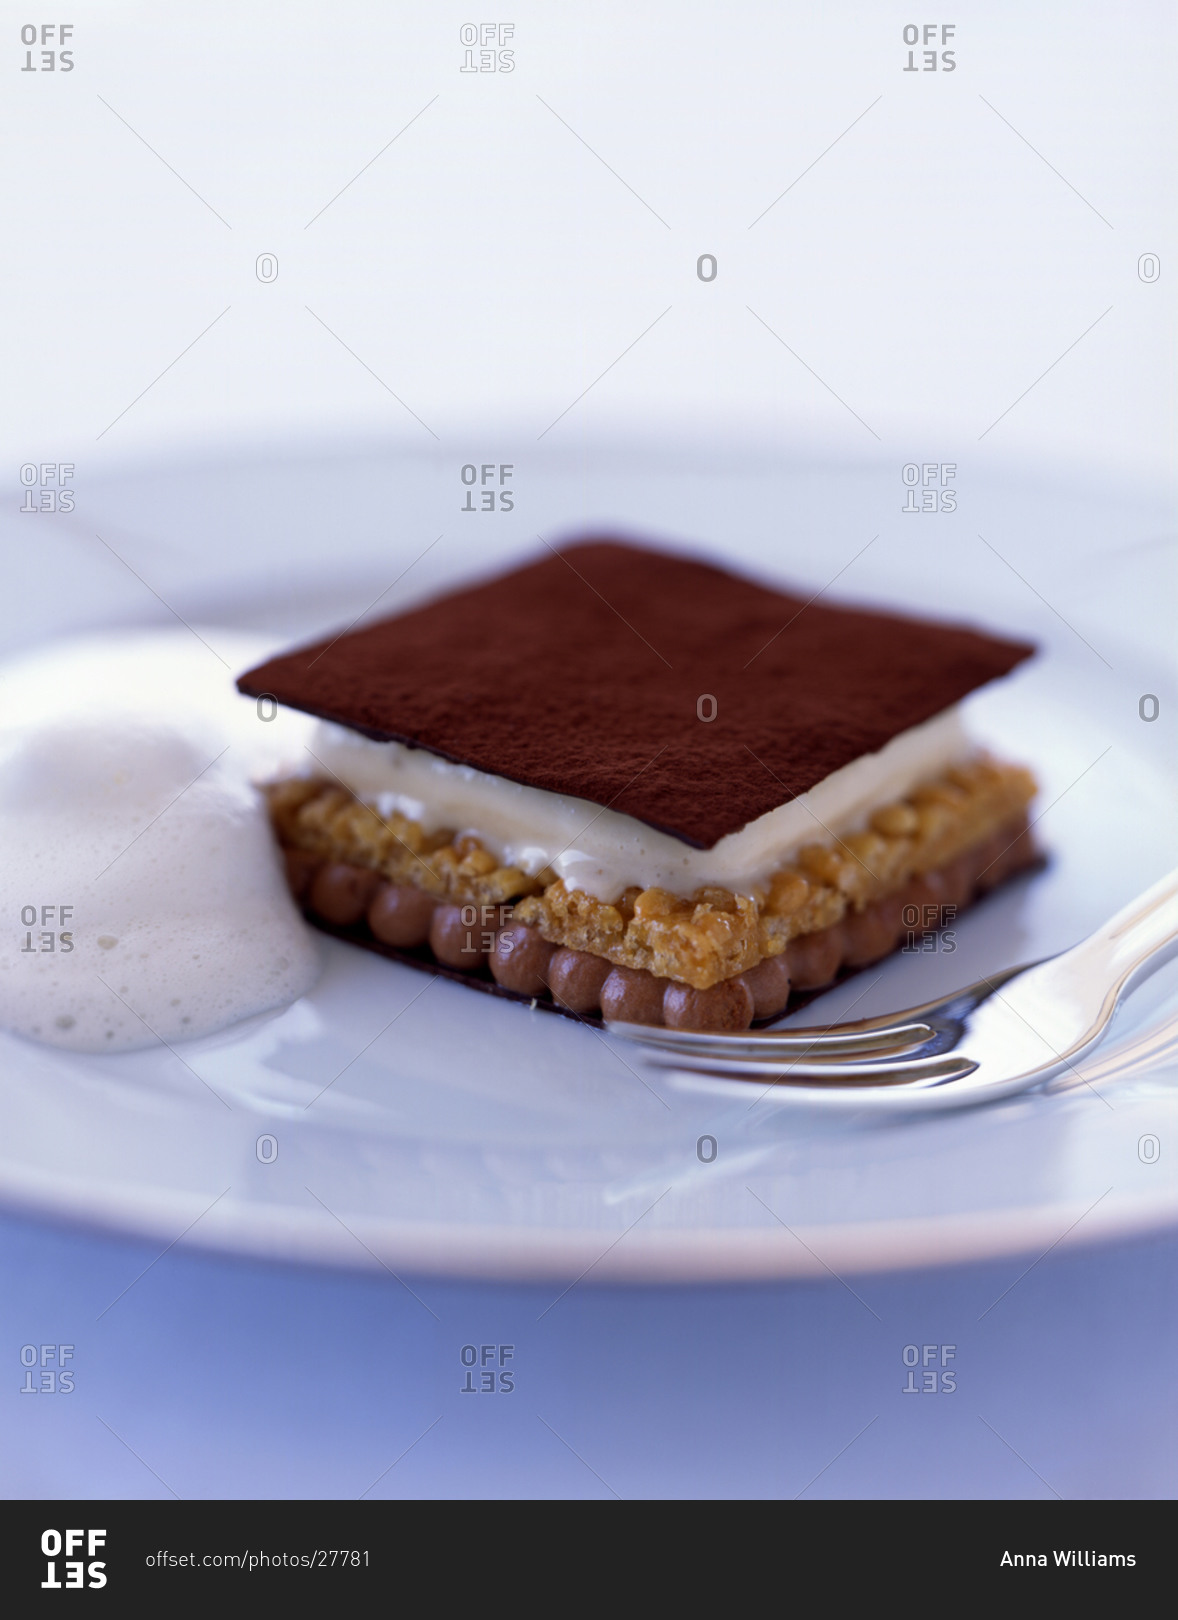 Molecular gastronomy: layered creamy dessert served with foam